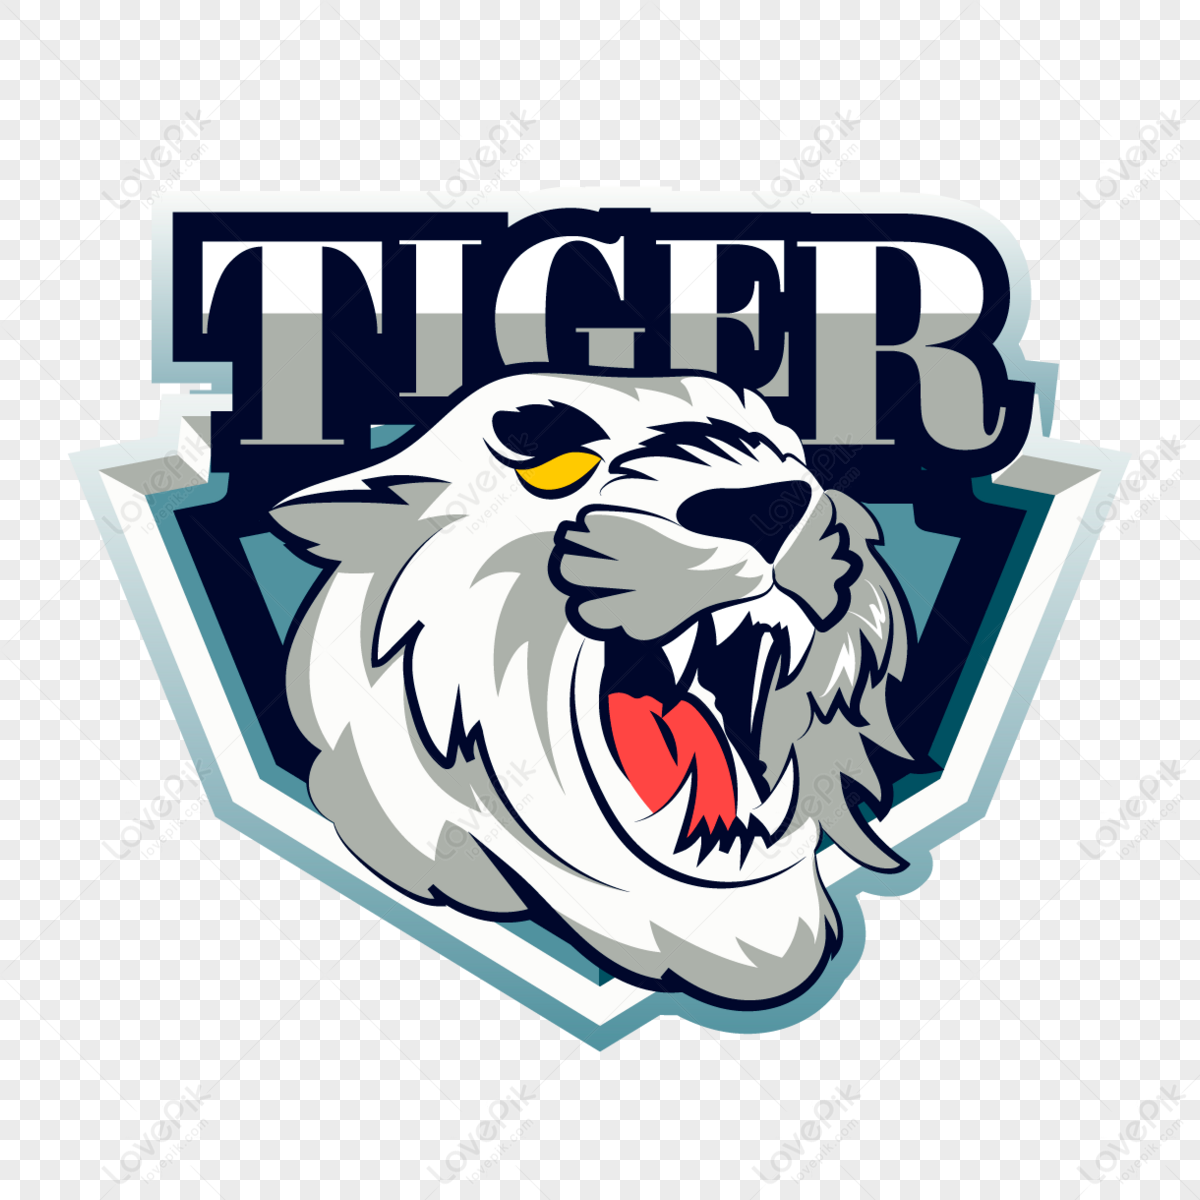 Memphis Tigers Logo PNG Transparent & SVG Vector - Freebie Supply